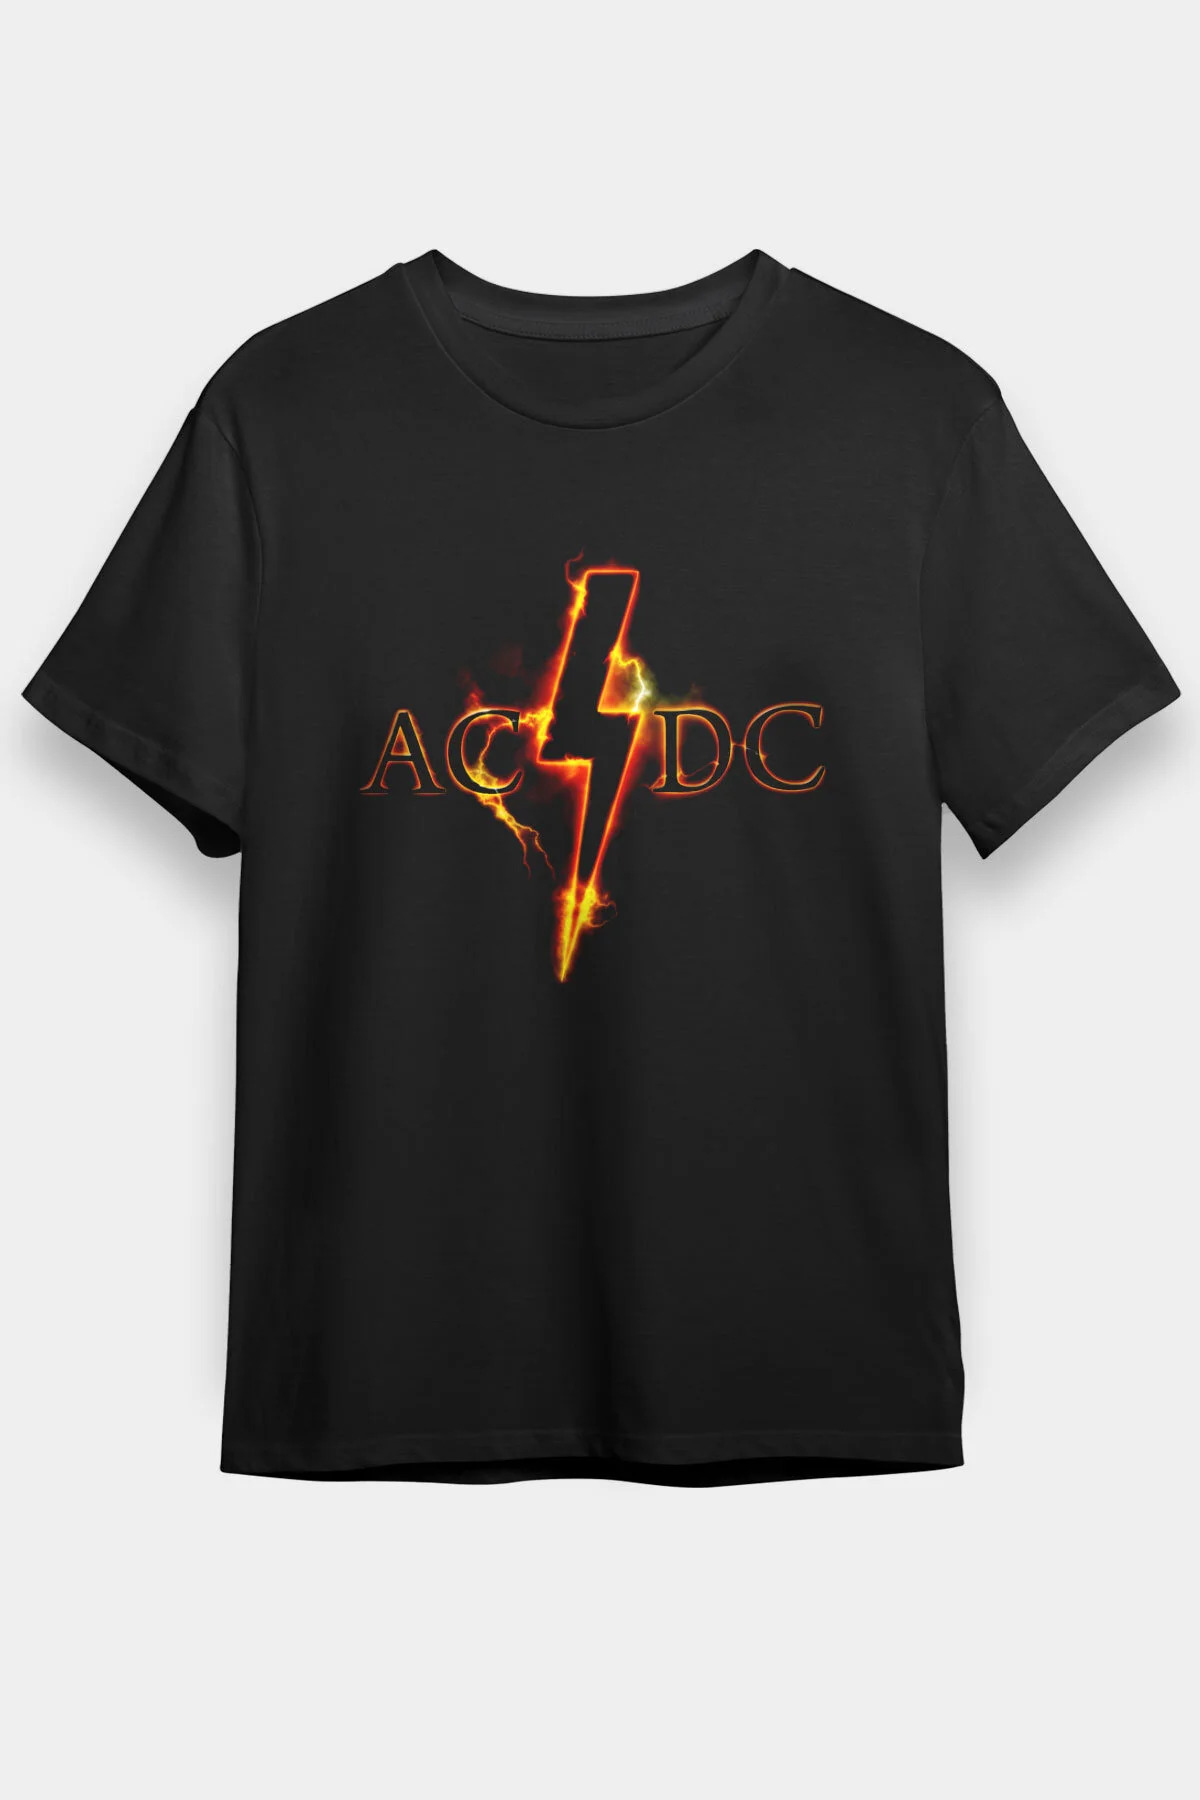 AC DC thunderbolt Unisex Tshirt 063